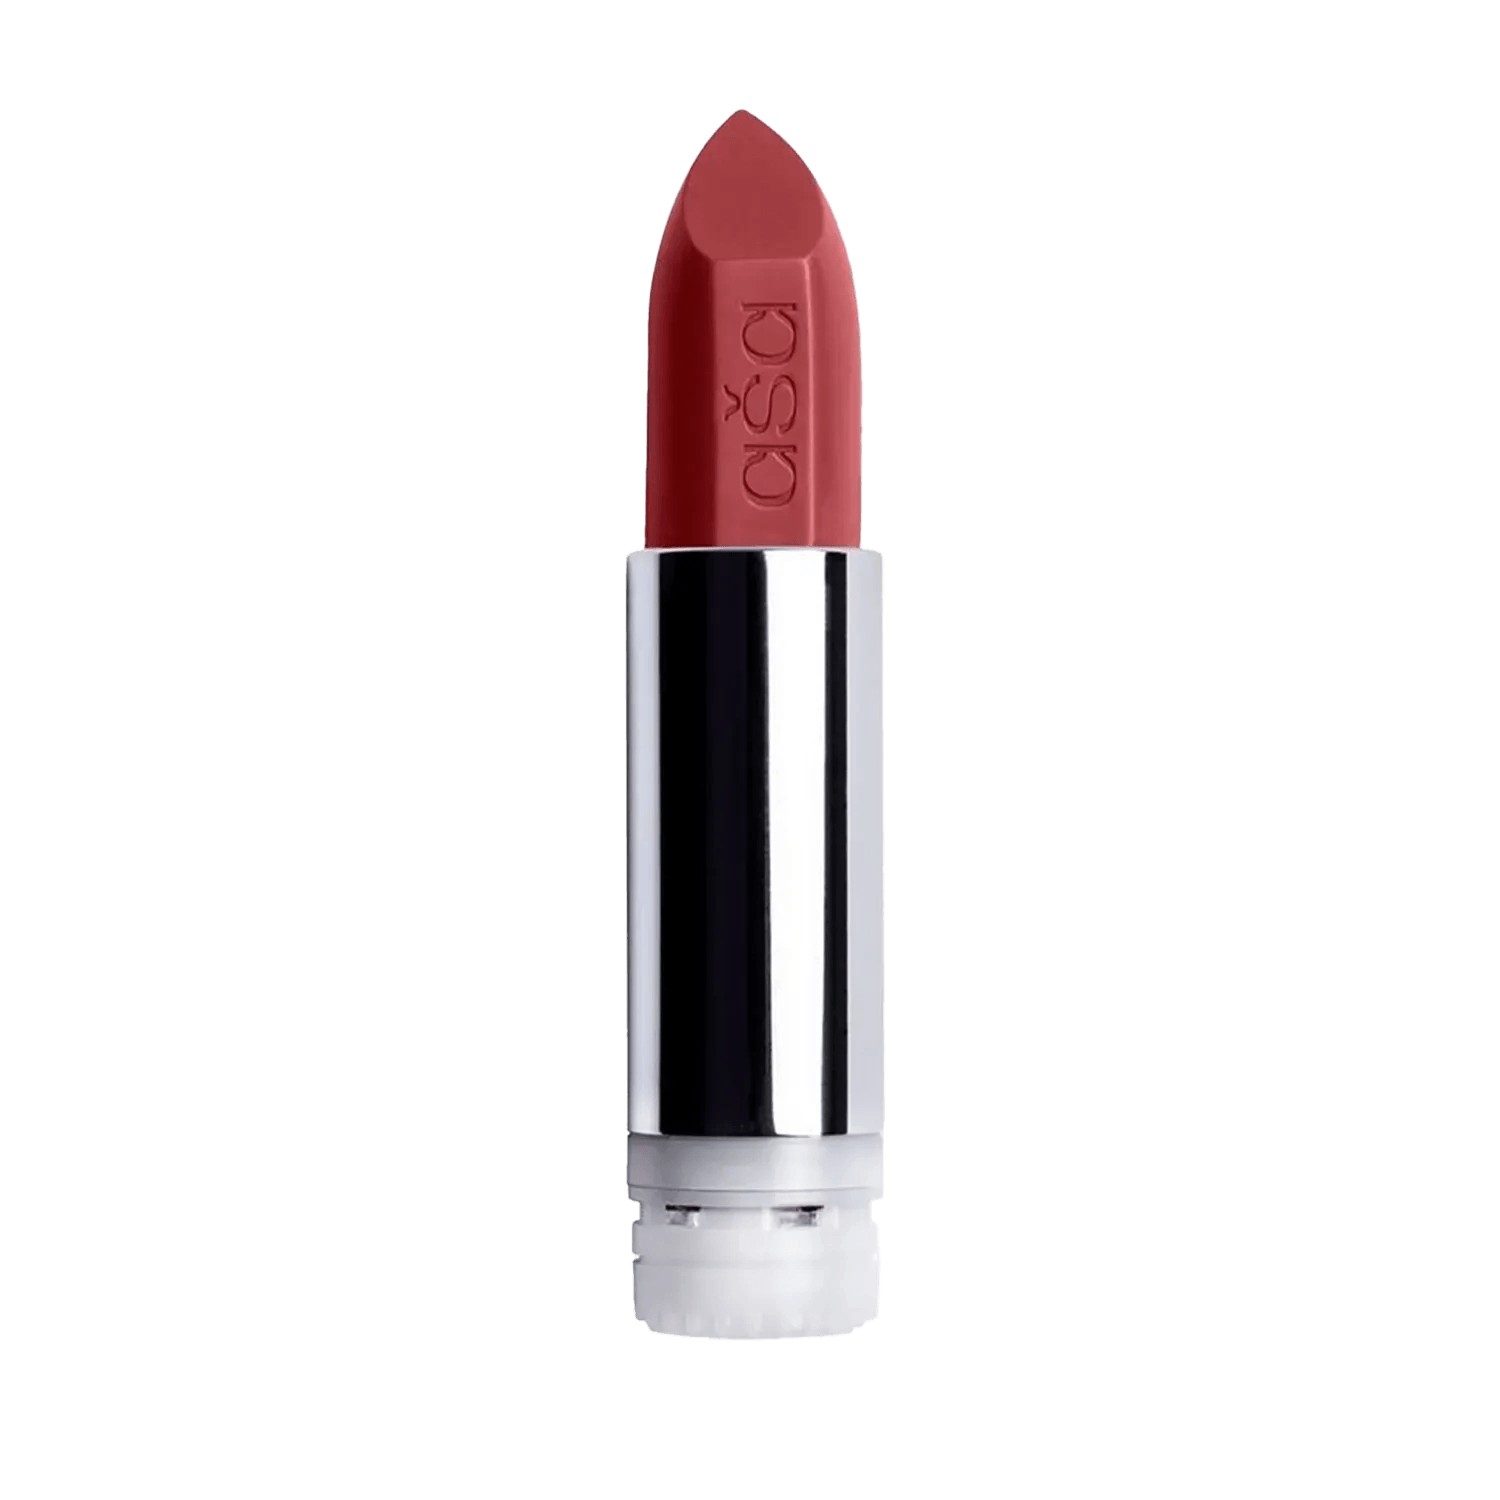 asa beauty Crème Lipstick - Fiery Fig C06 - Refill (4.2g)